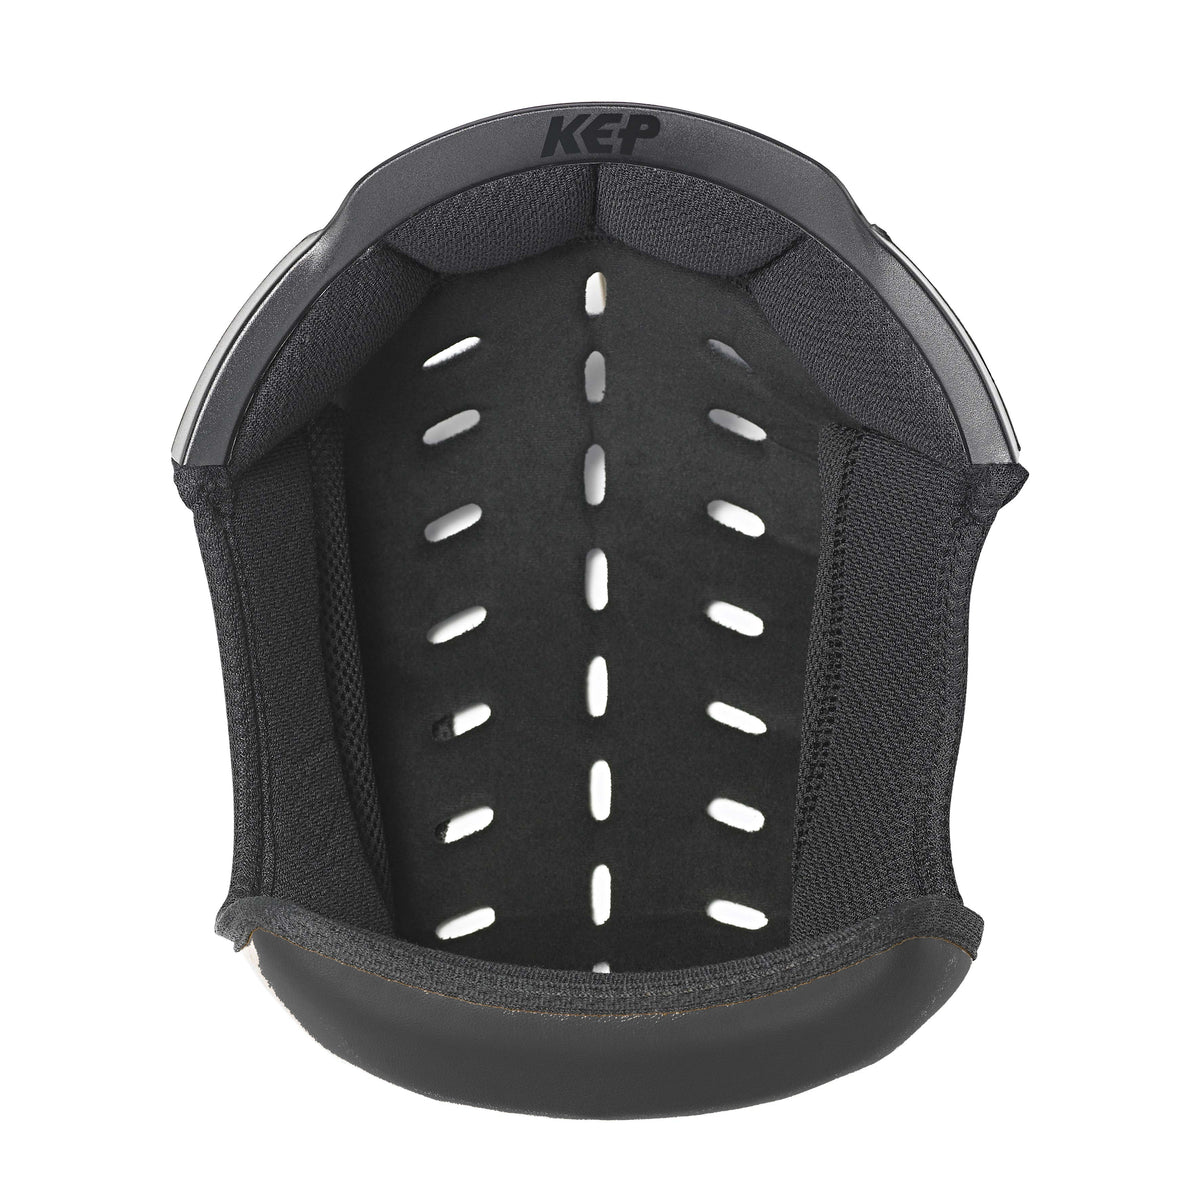 KEP ITALIA HELMETS & SAFETY Kep Helmet Liner